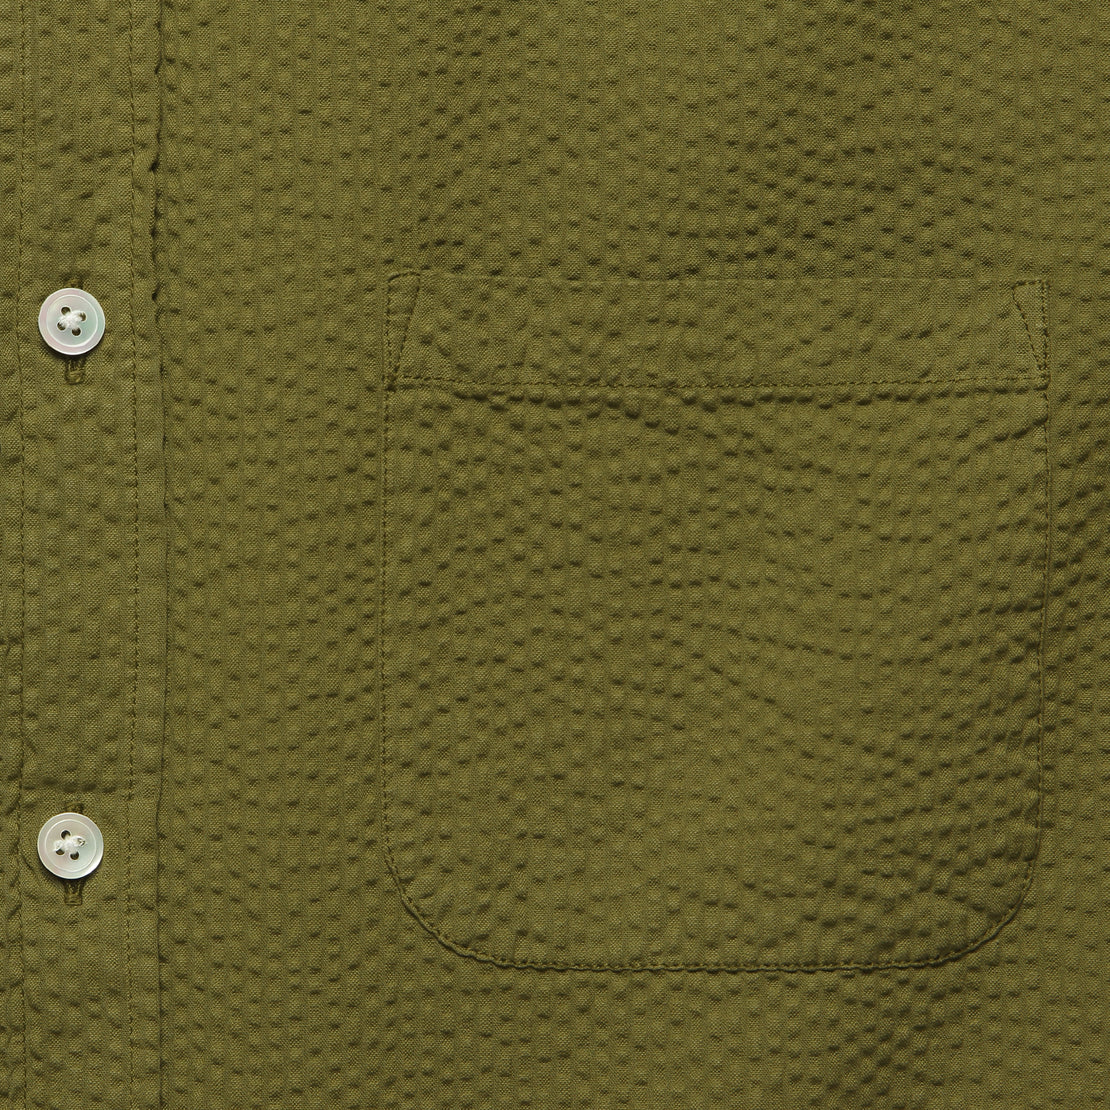 Atlantico Seersucker Shirt - Olive - Portuguese Flannel - STAG Provisions - Tops - S/S Woven - Seersucker